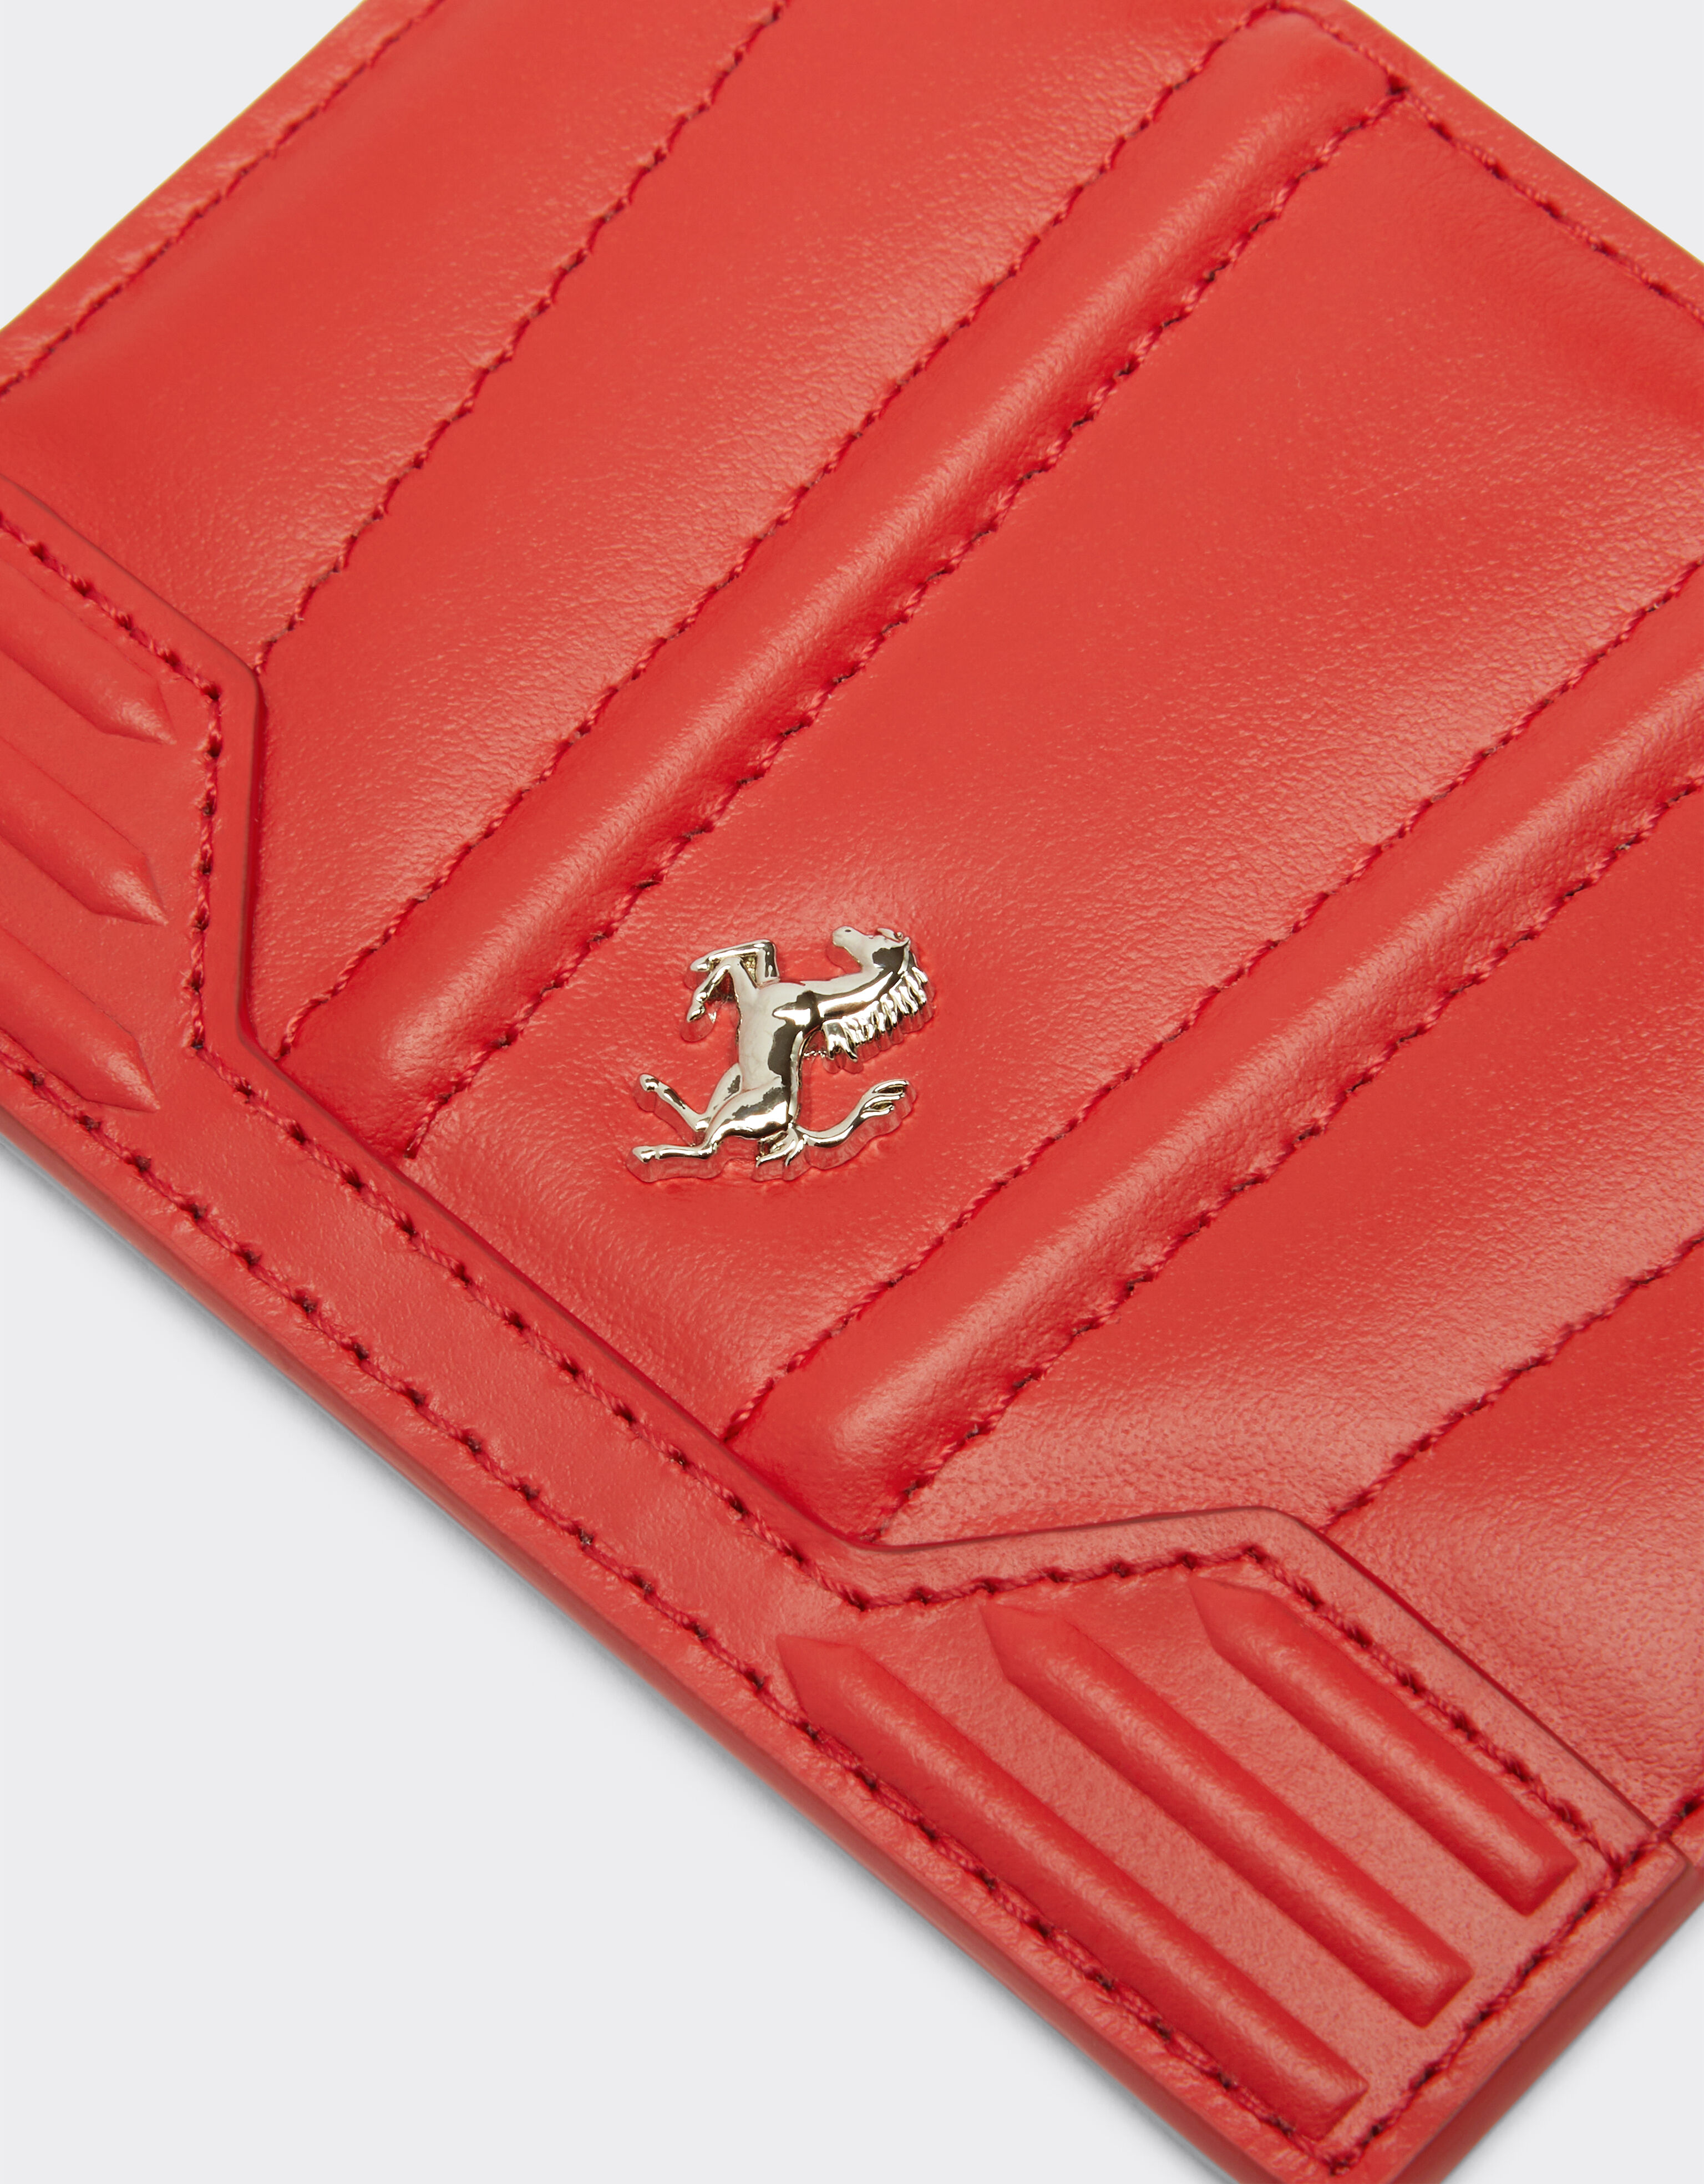 Ferrari GT Ferrari leather card holder with livery motif Rosso Dino 20604f